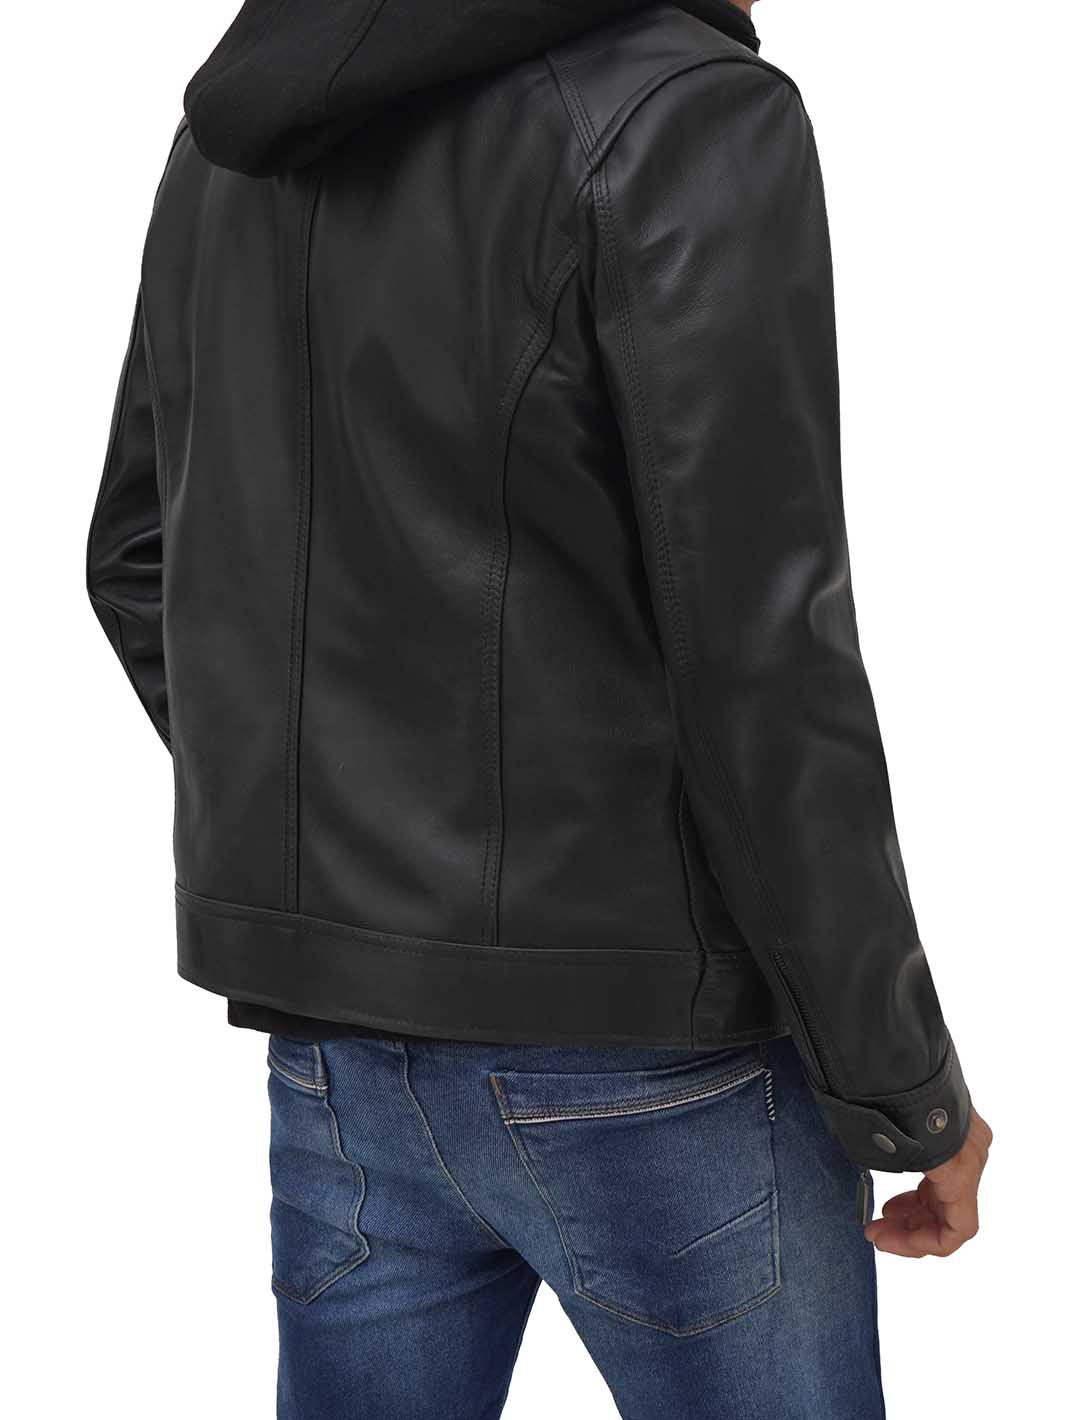 Mens Black Biker Leather Jacket with Hood